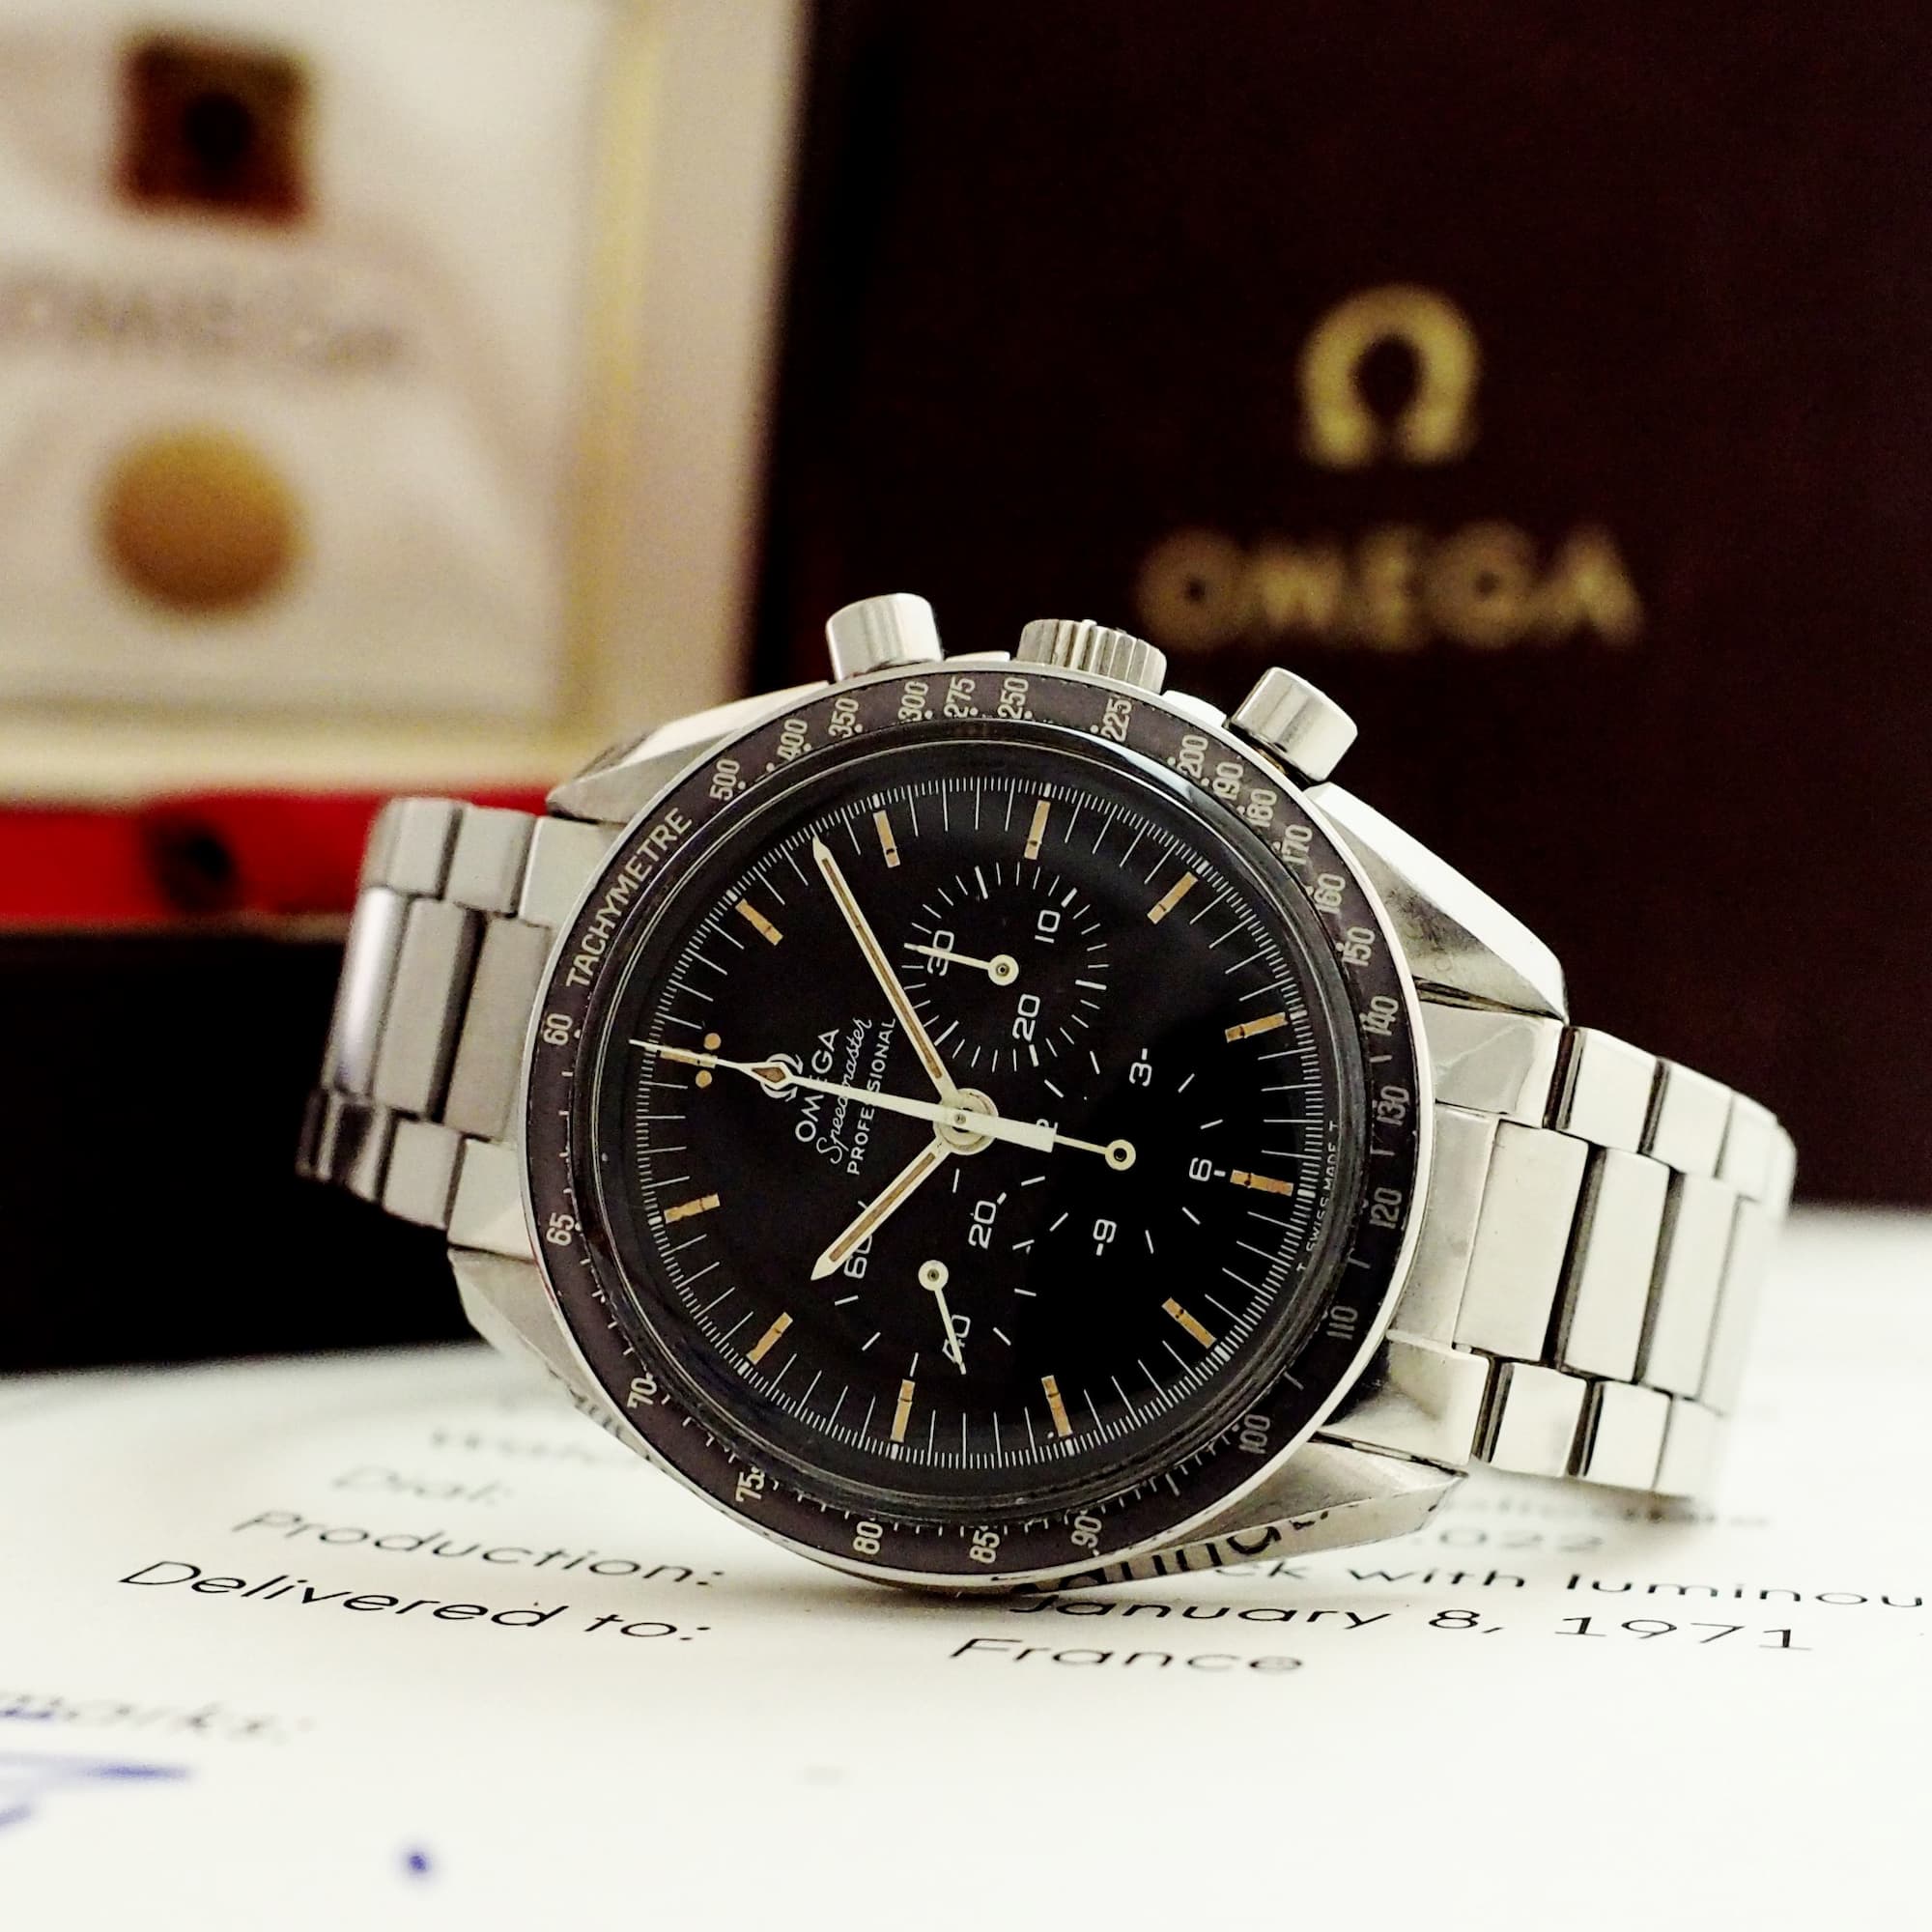 Omega Speedmaster Professional Moonwatch 145.022